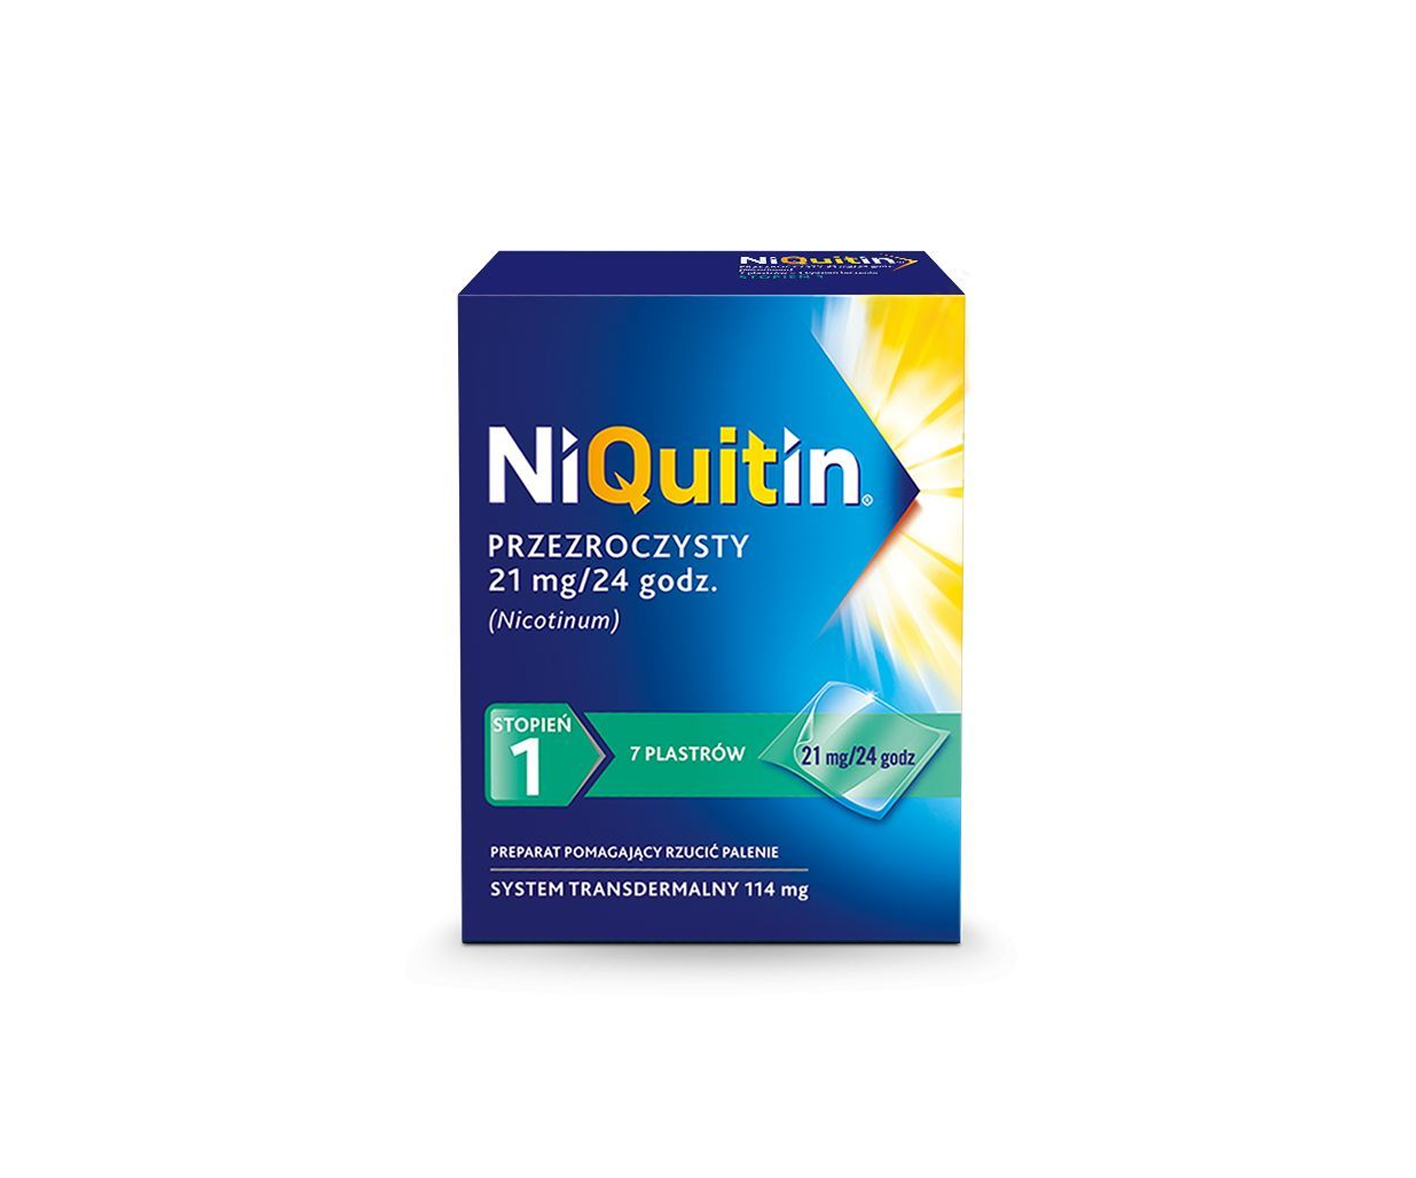 NiQuitin, stupeň 1, náplasti na odvykanie od fajčenia